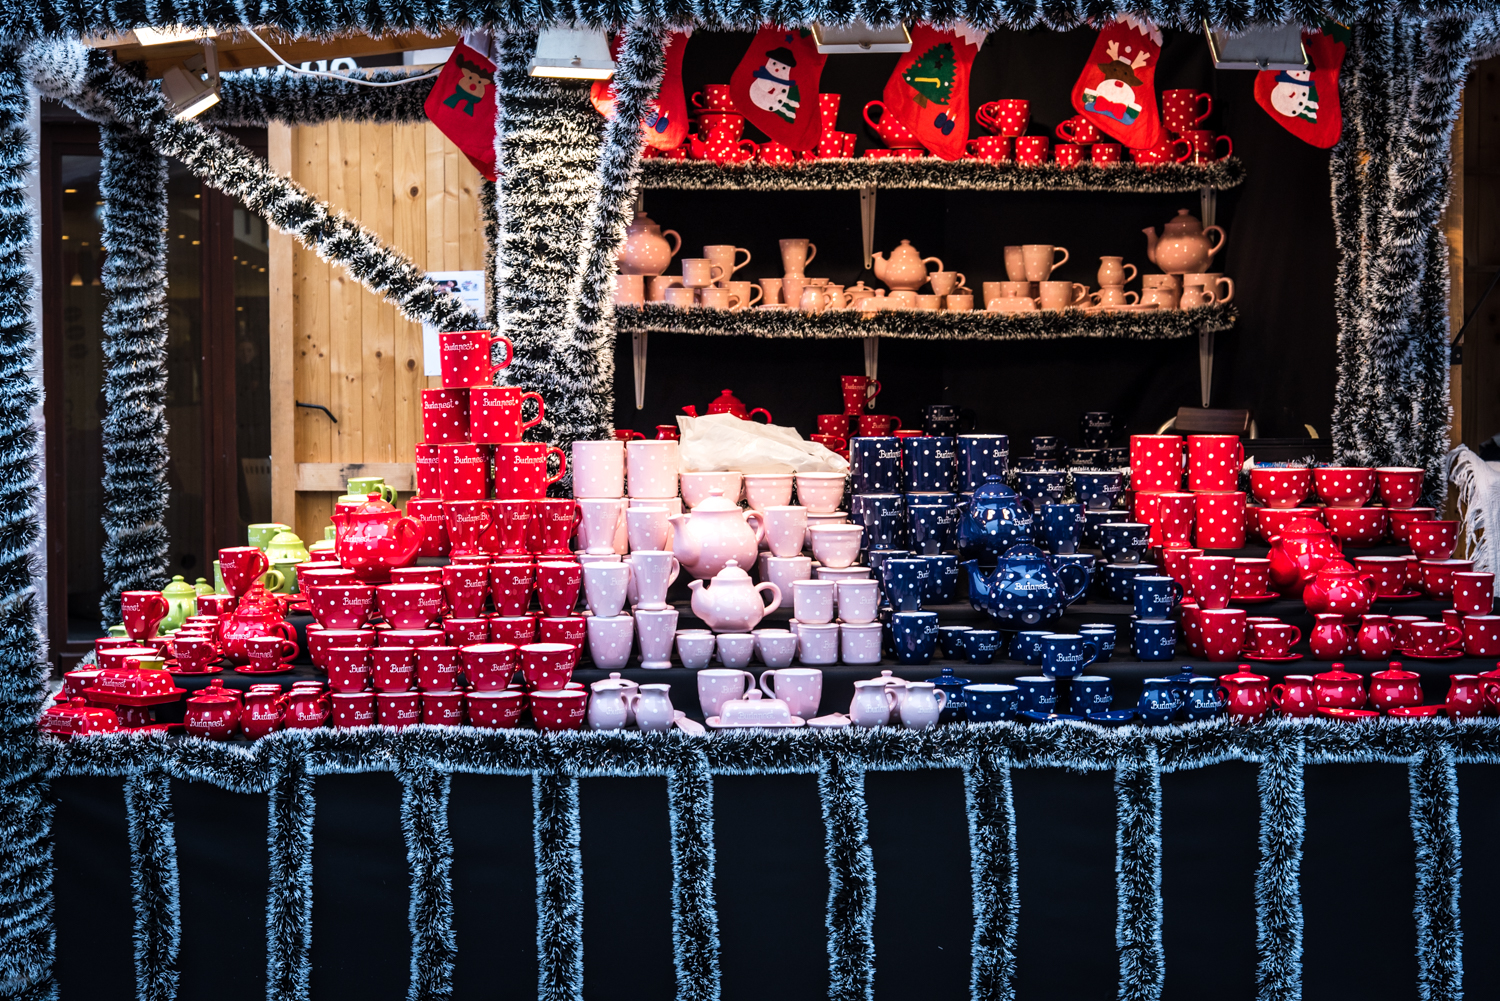 A karácsonyi vásár magyarul - Vörösmarty tér